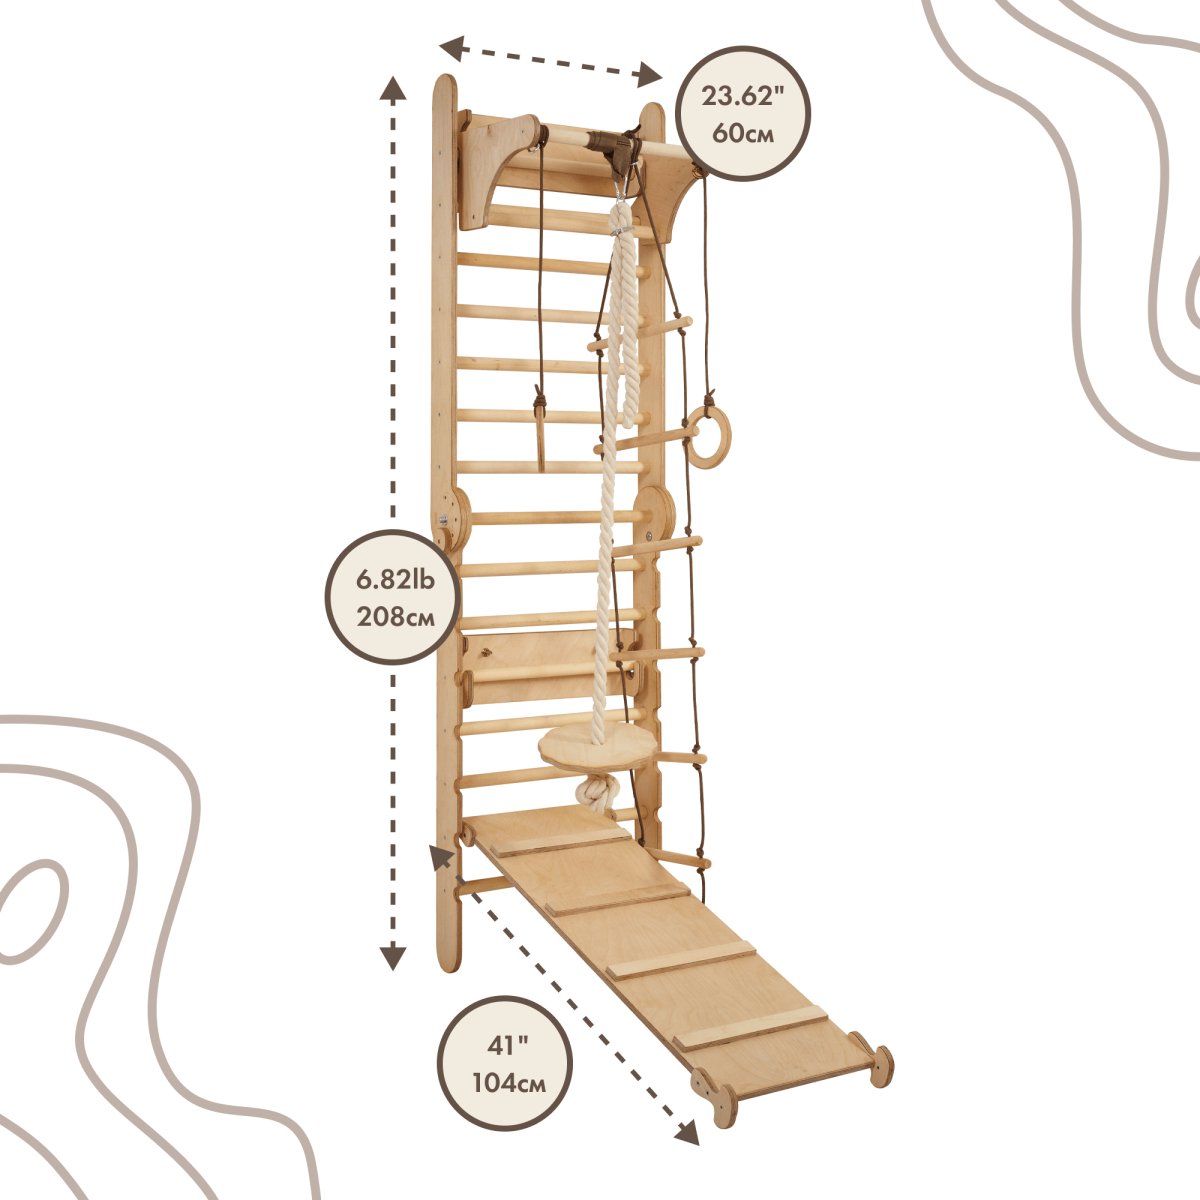 4in1 Climbing Set: Wooden Swedish Wall + Swing Set + Slide Board + Triangle Ladder Goodevas